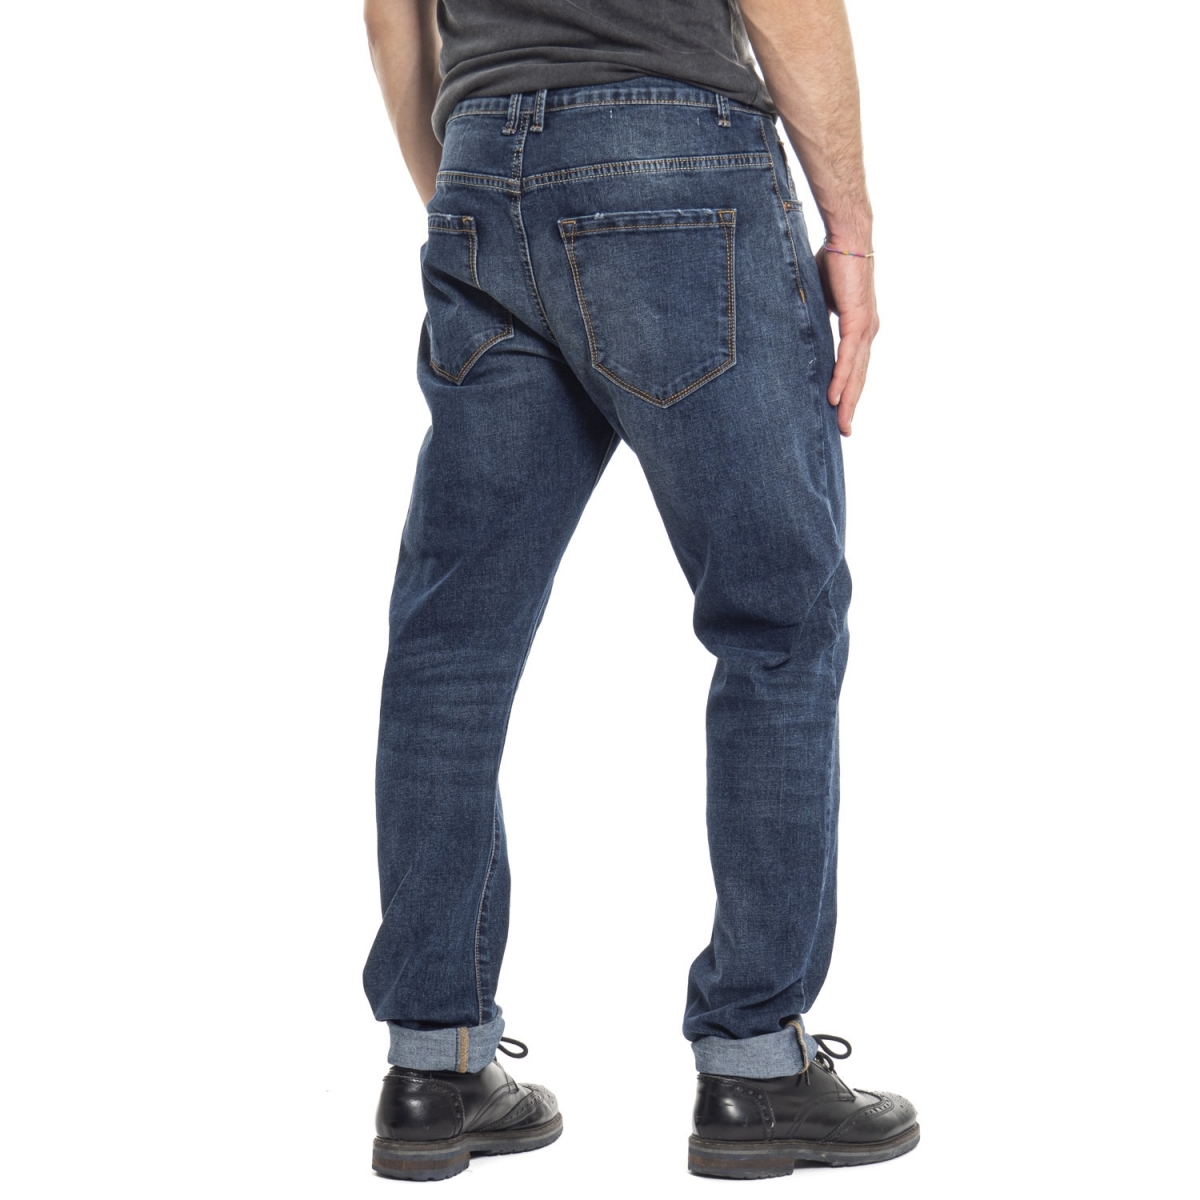 Kleidung Jeans mann Jeans ATM1088-3 LANDEK PARK Cafedelmar Shop